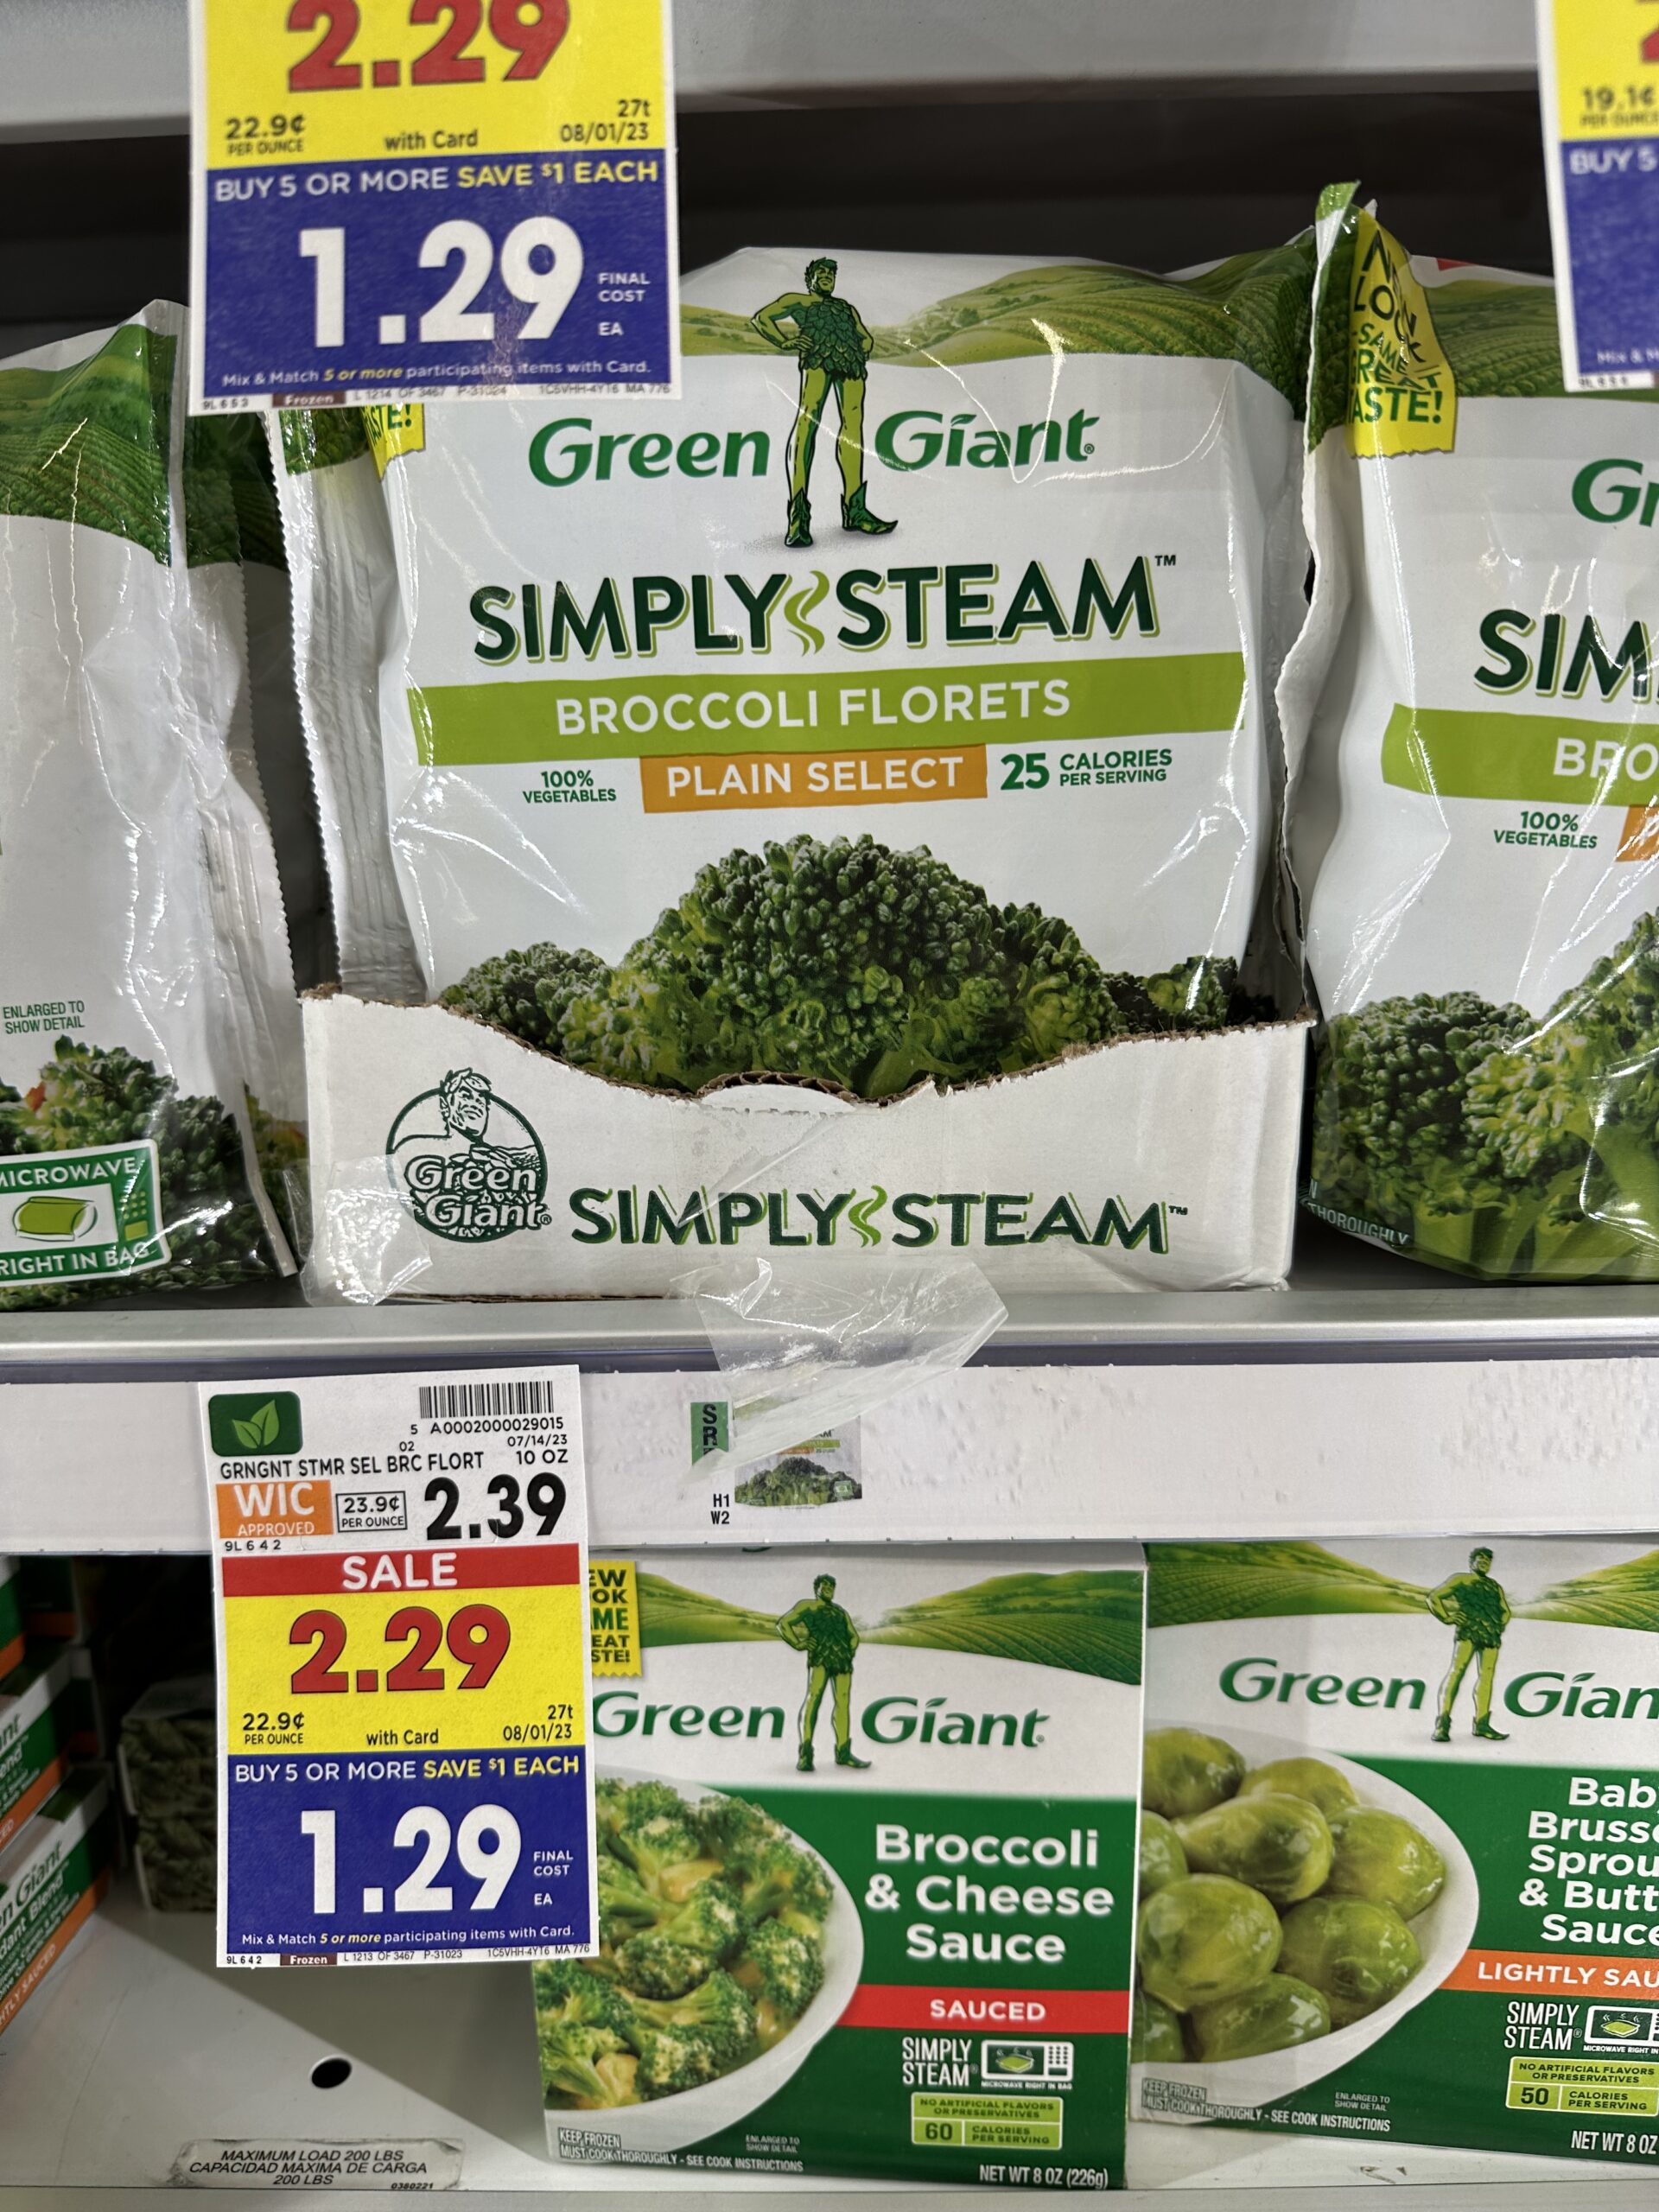 green giant simply steam kroger shelf image 1